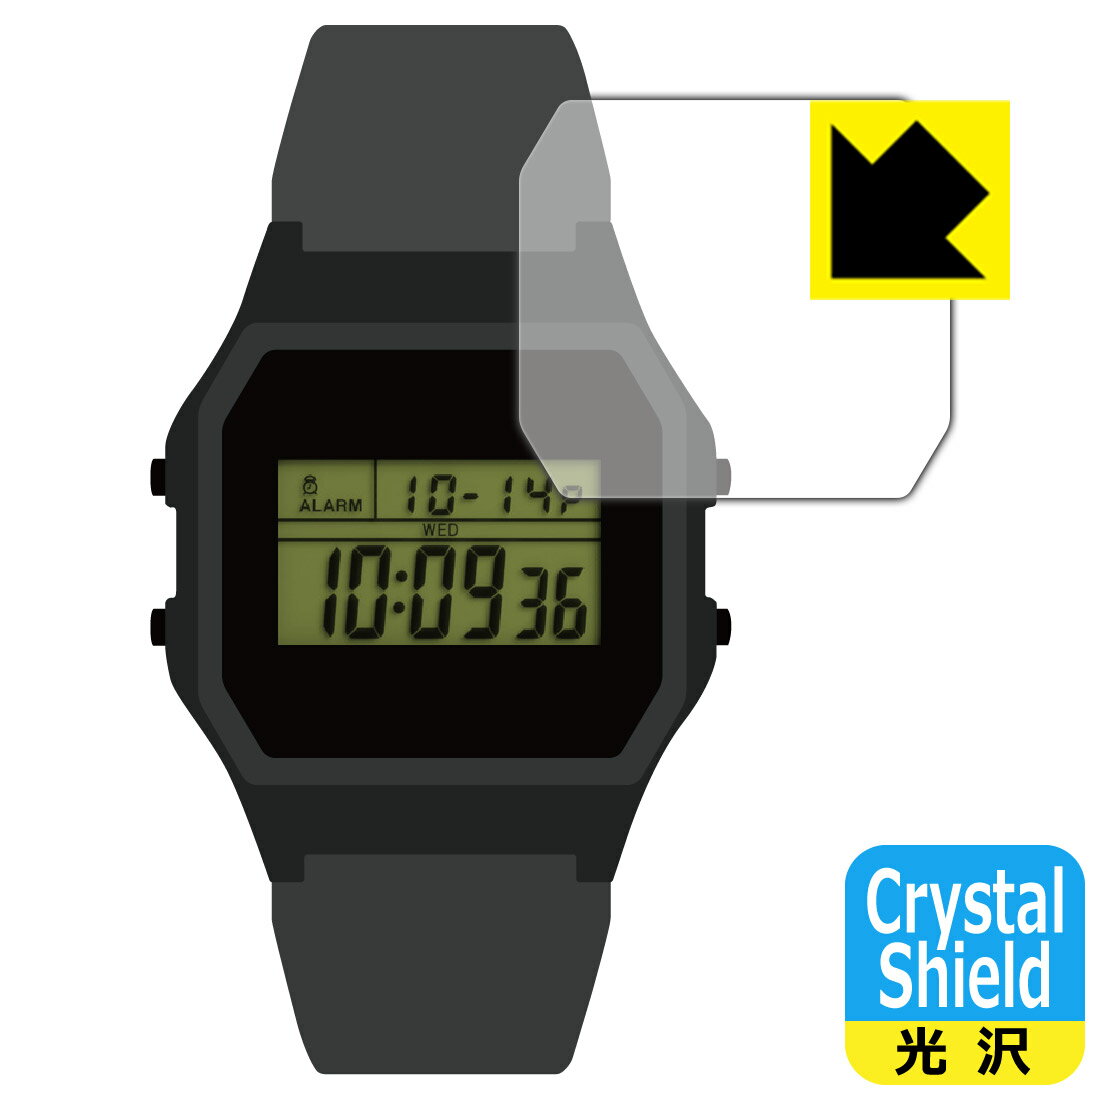 Crystal Shield【光沢】保護フィルム TIMEX Classic Digital TIMEX 80 Keith Haring T80 日本製 自社製造直販